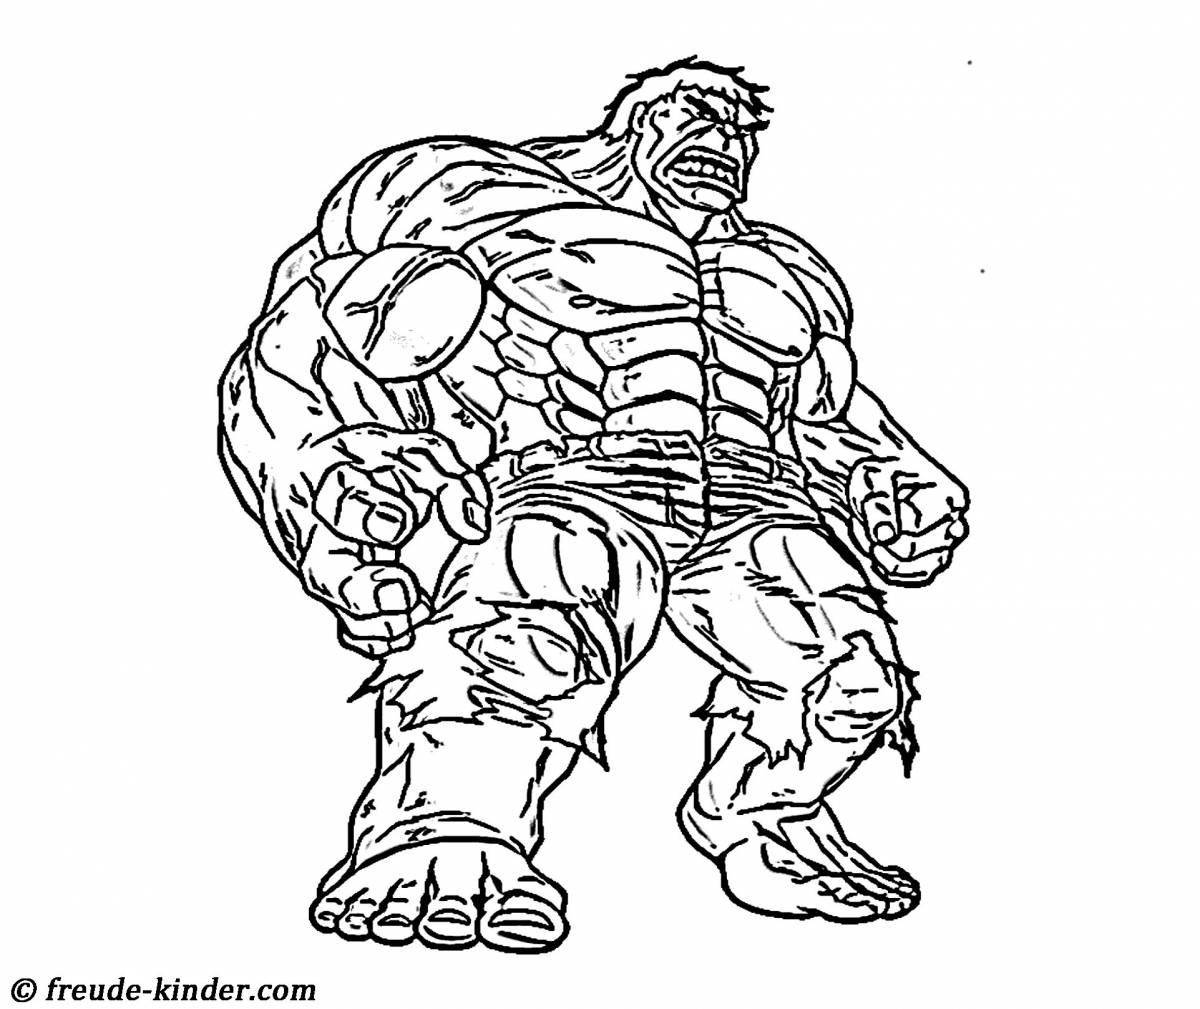 Impressive iron hulk coloring page